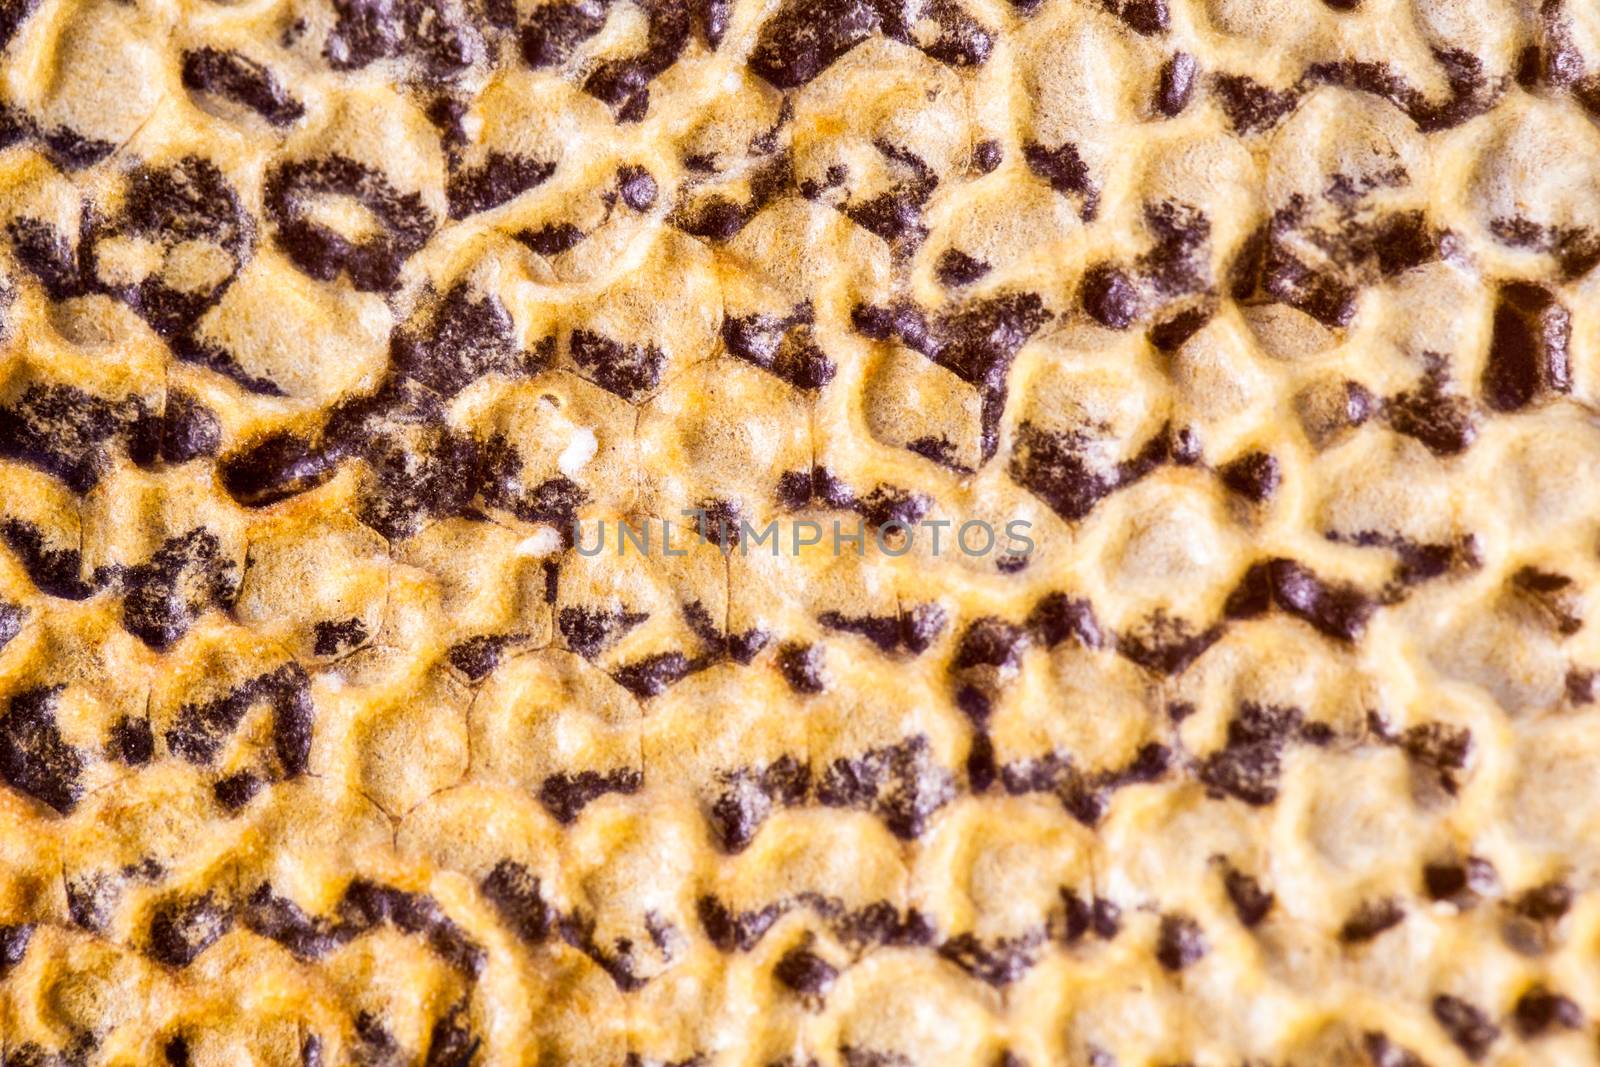 Macro shot of bees swarming on a honeycomb by viktor_cap